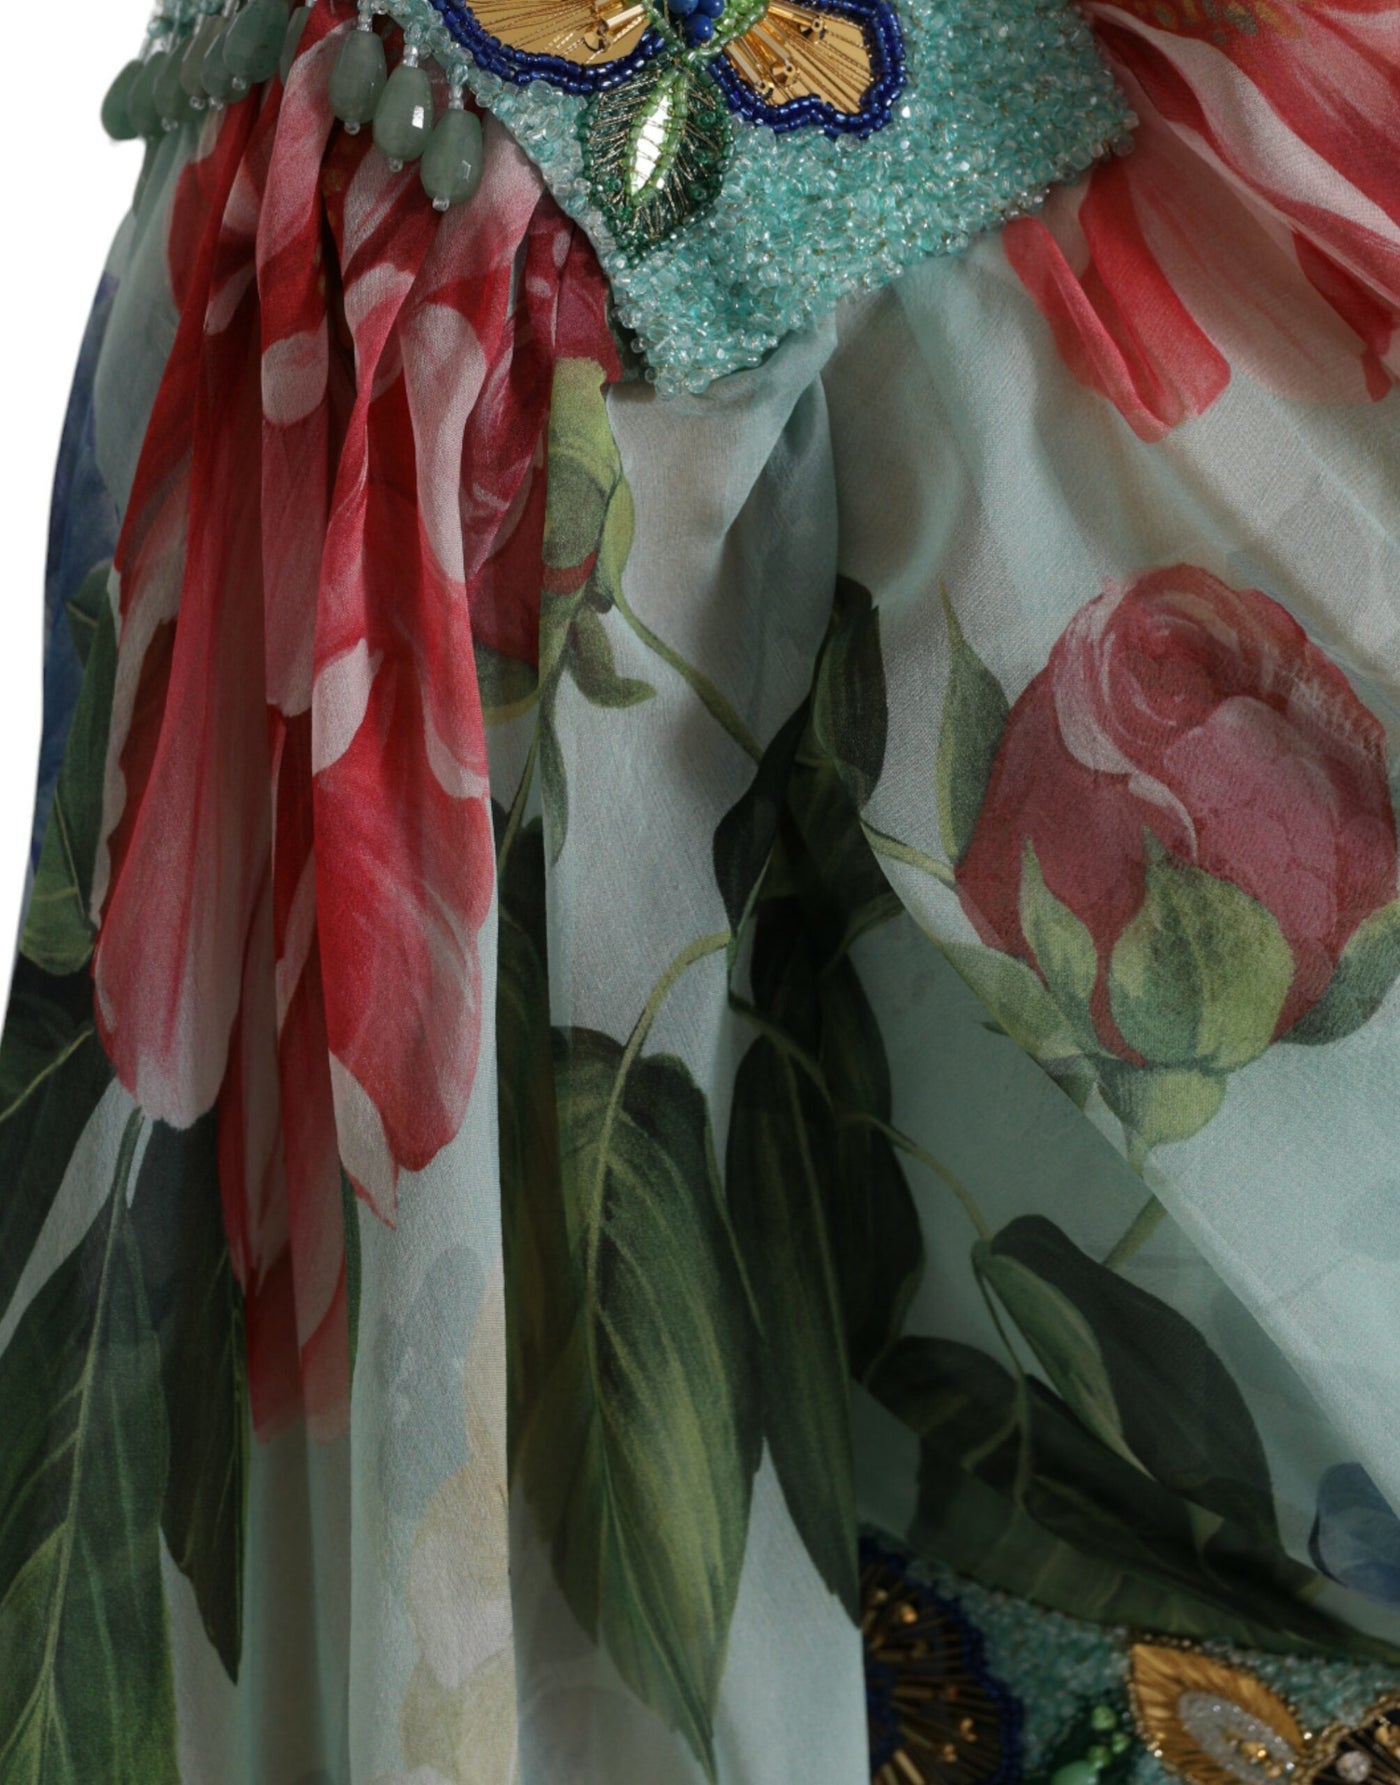 Dolce & Gabbana Blue Floral Print Tiered Long Maxi Dress